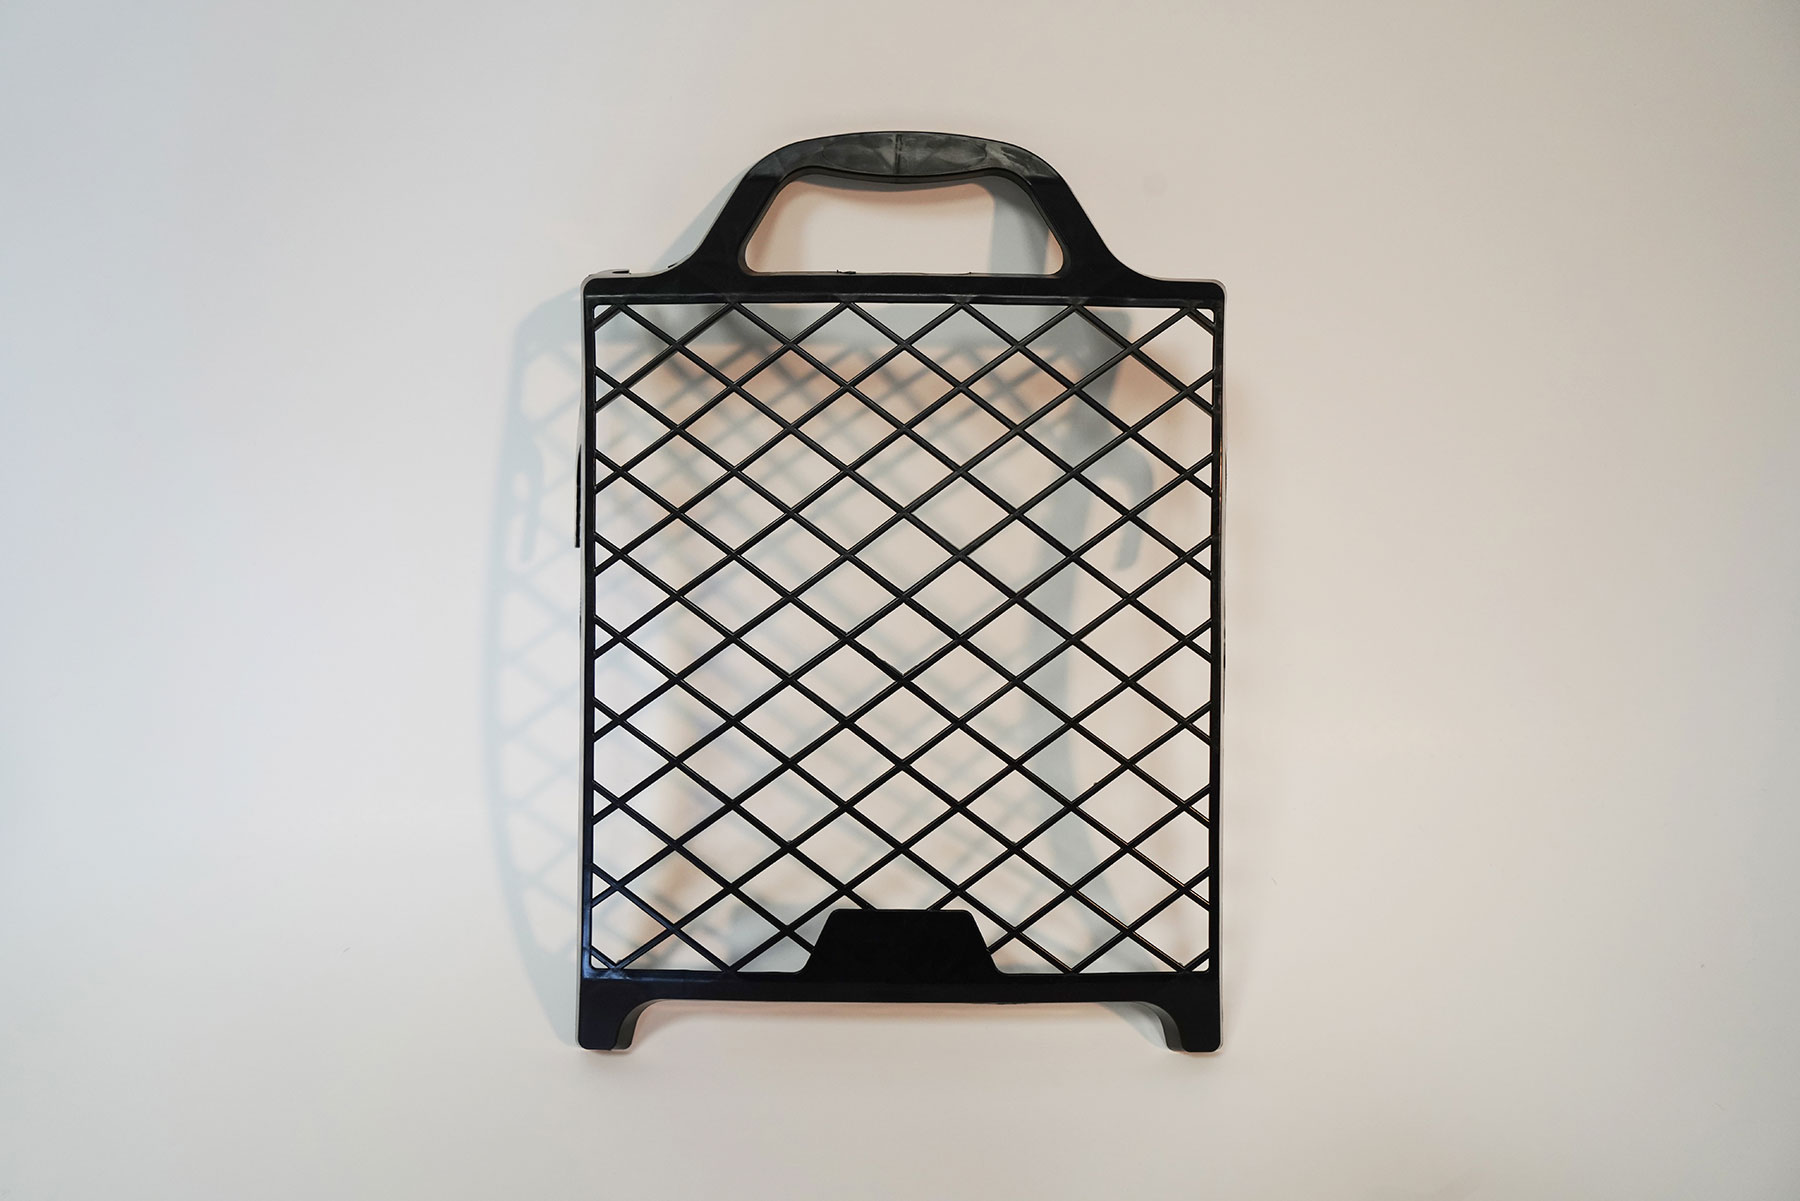             Scraper grid 22 x 25 cm with bucket hooks
        